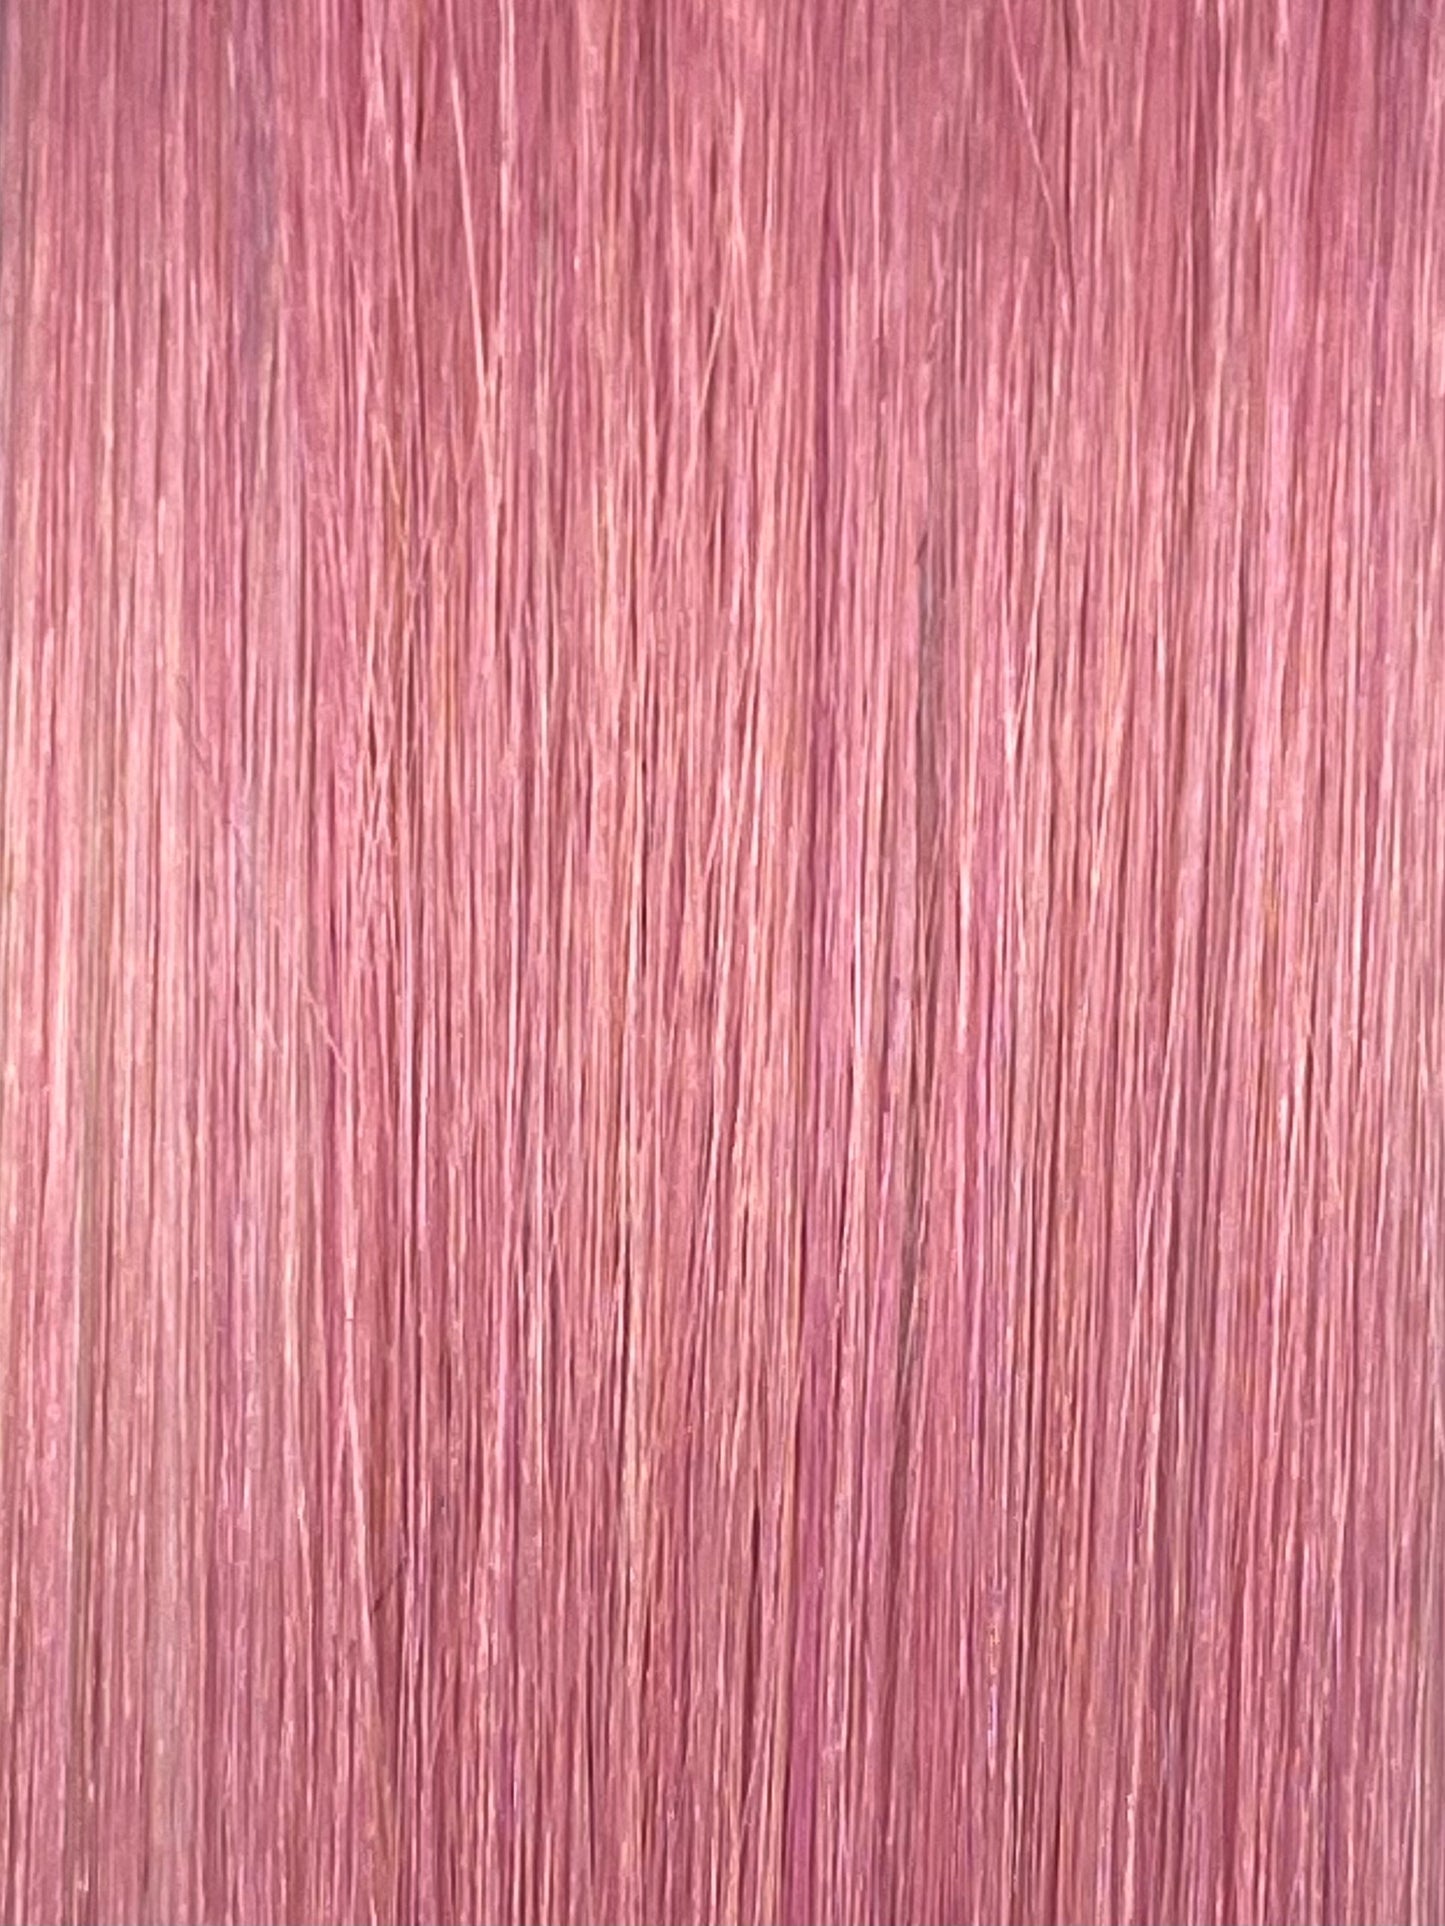 Fusion hair extensions #Lilac - Fantasy - 50cm/20 inches - Lilac Fusion Euro So Cap 